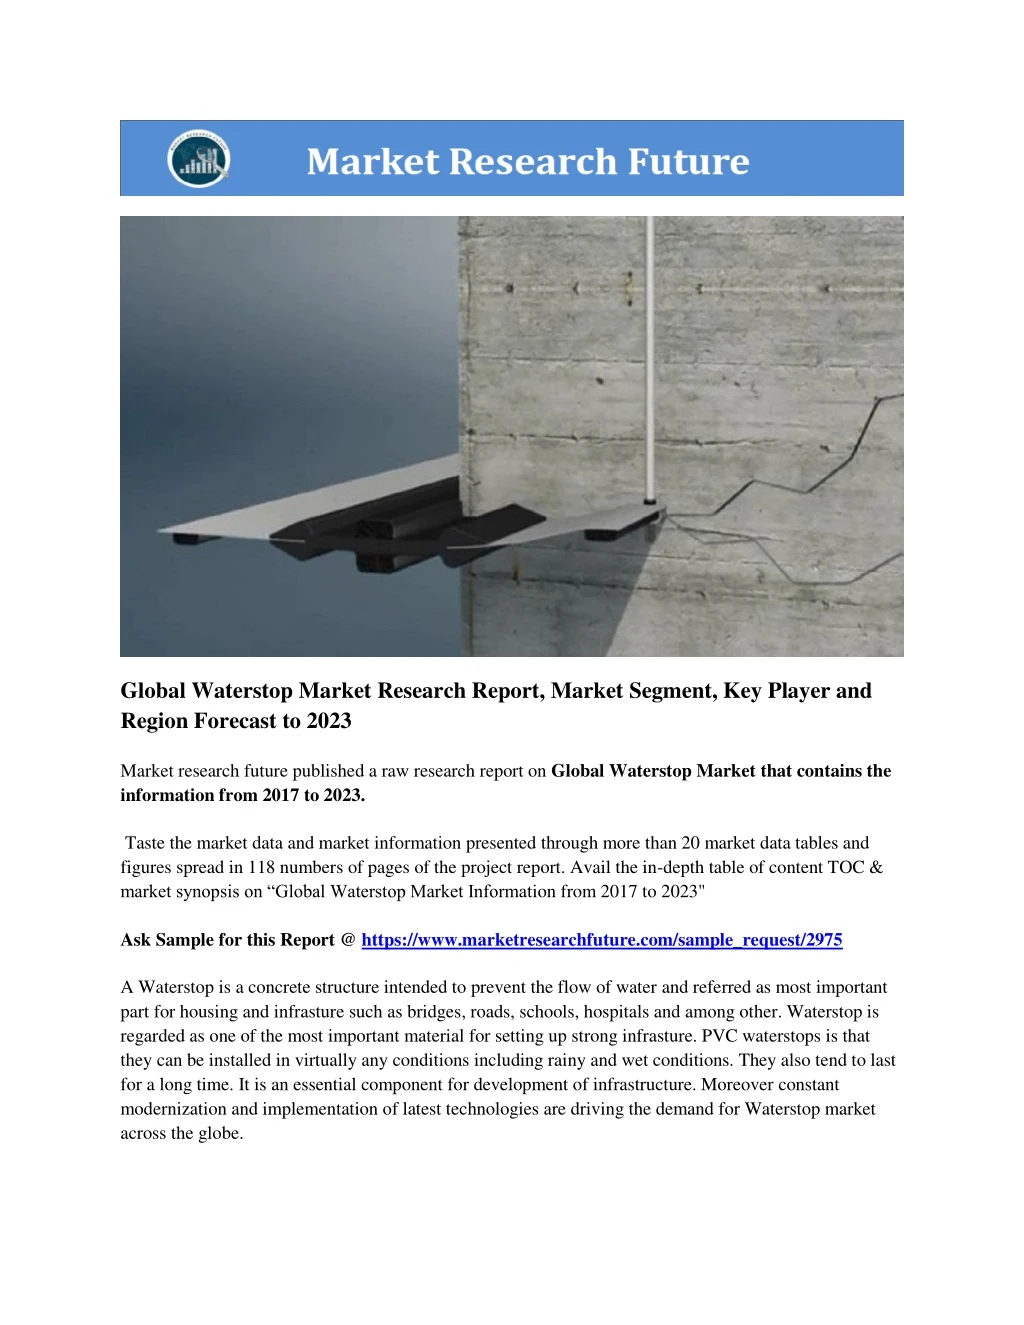 global waterstop market research report market